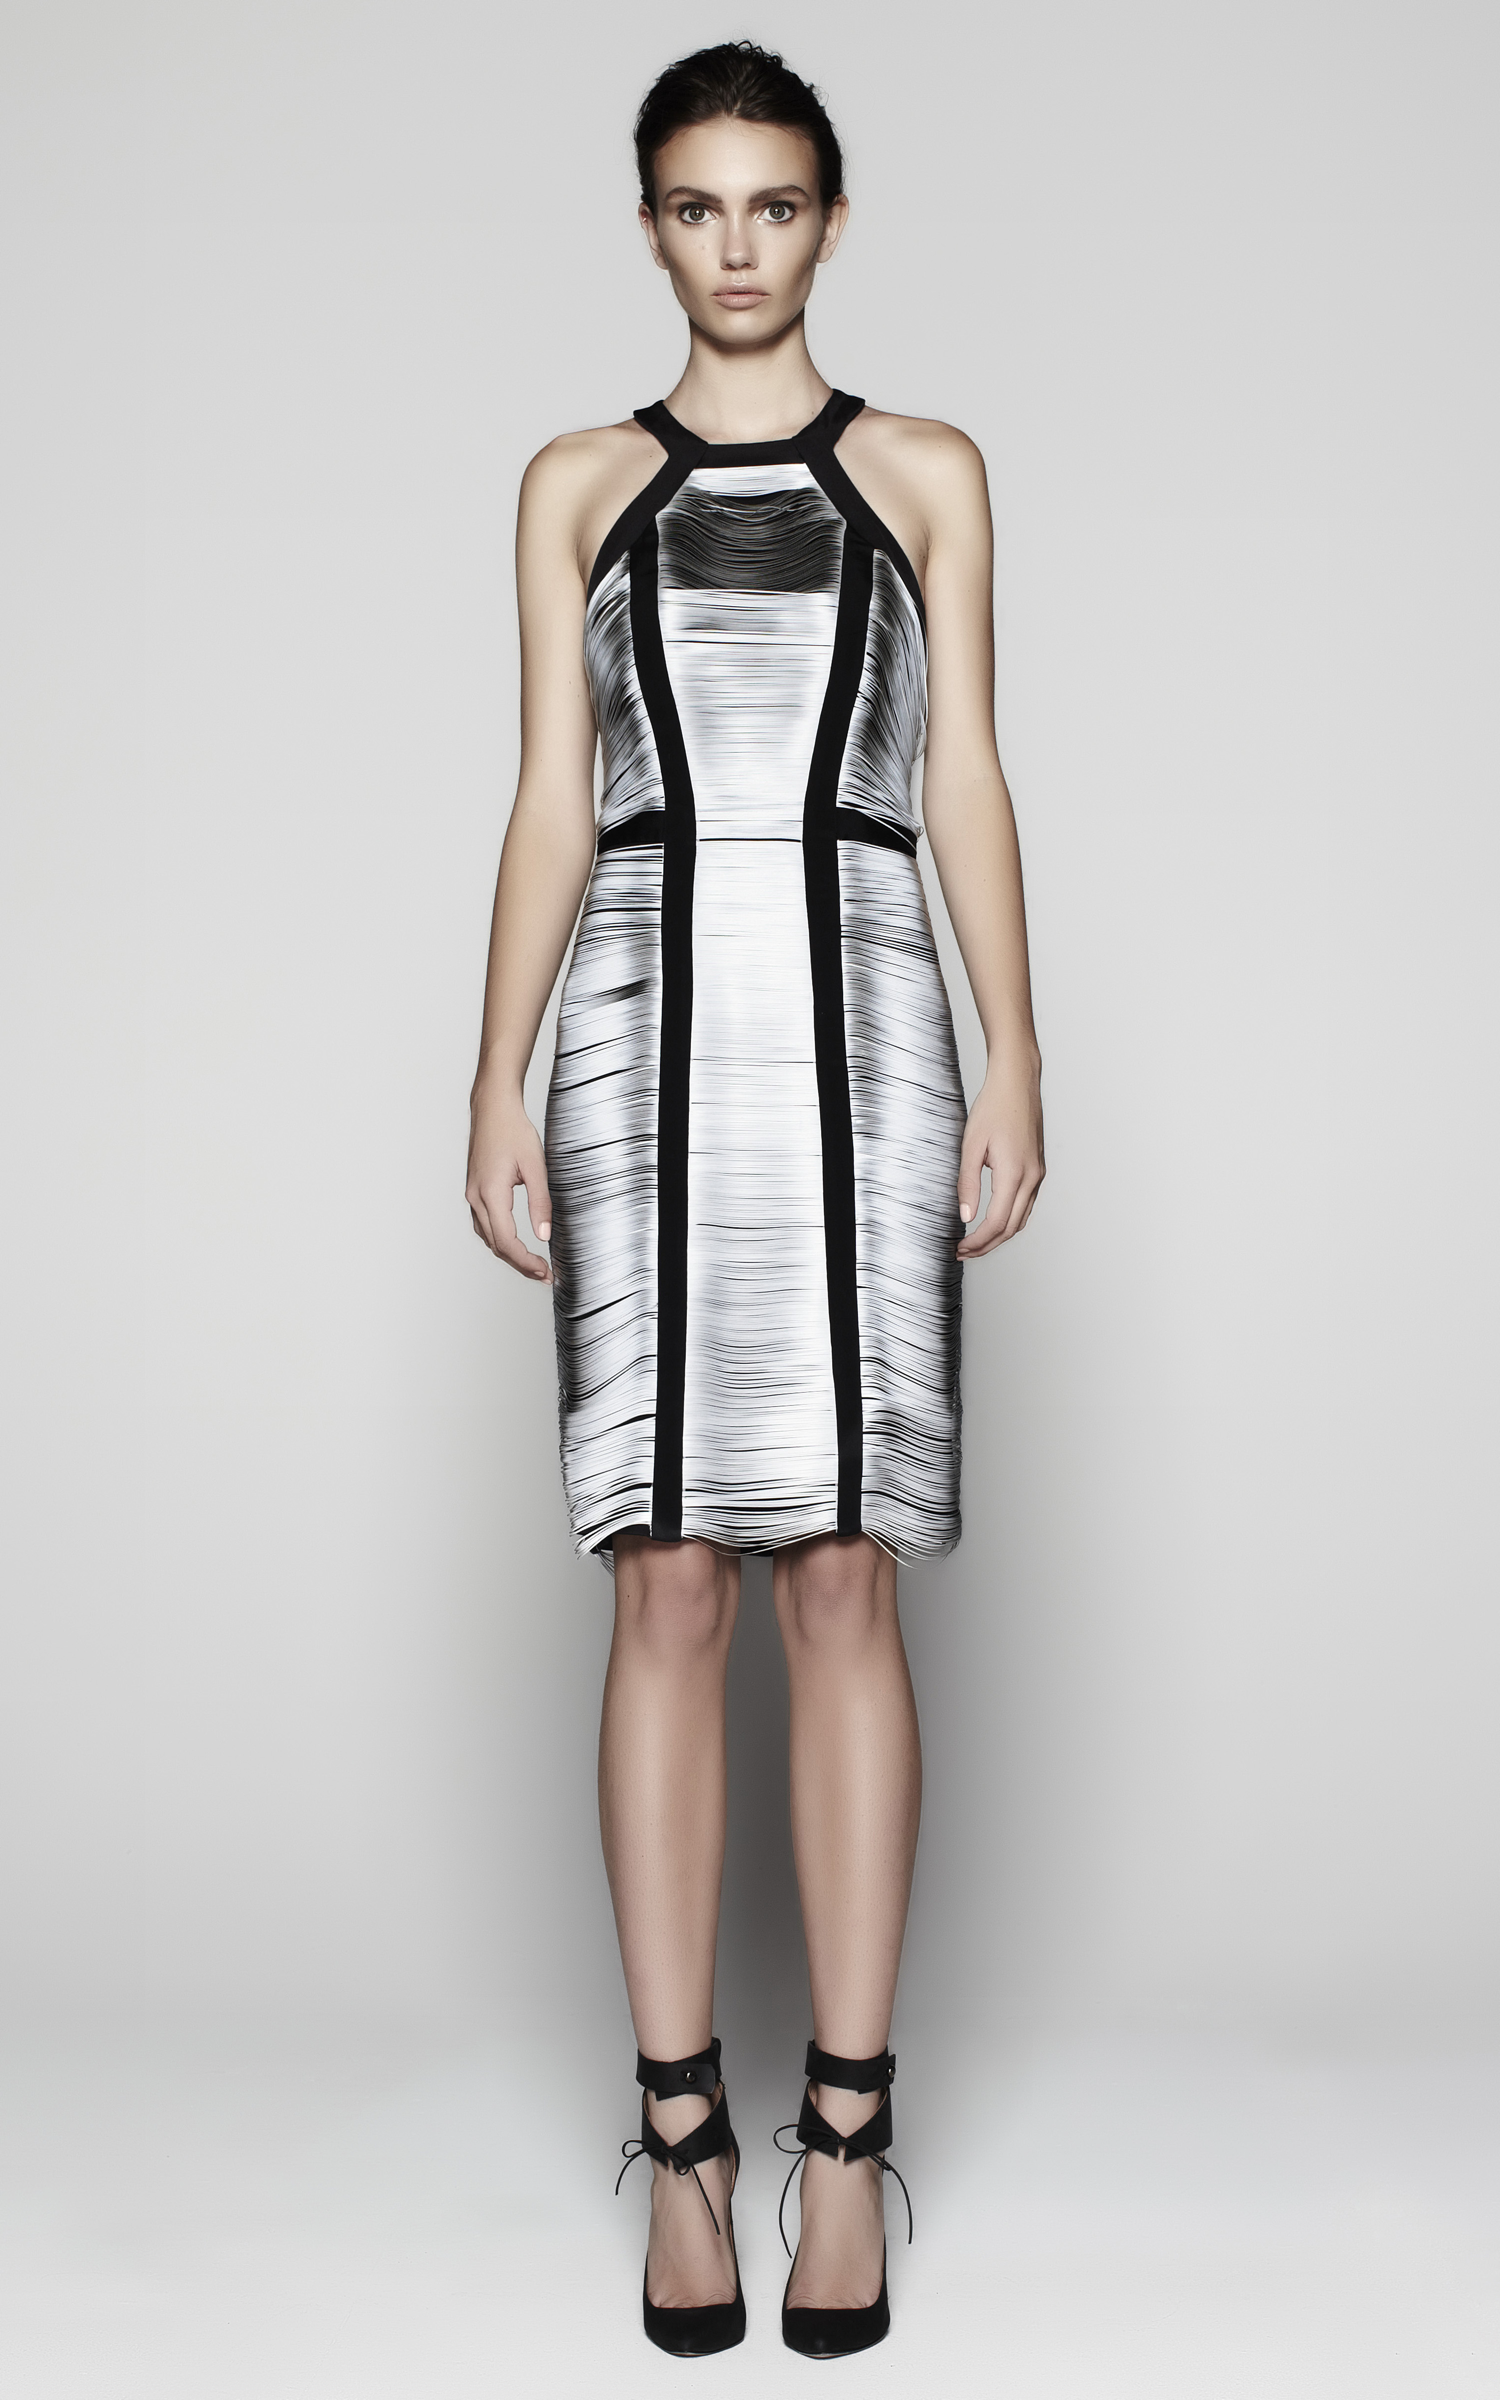 DesignApplause | Vein sleeveless dress. Dion lee.